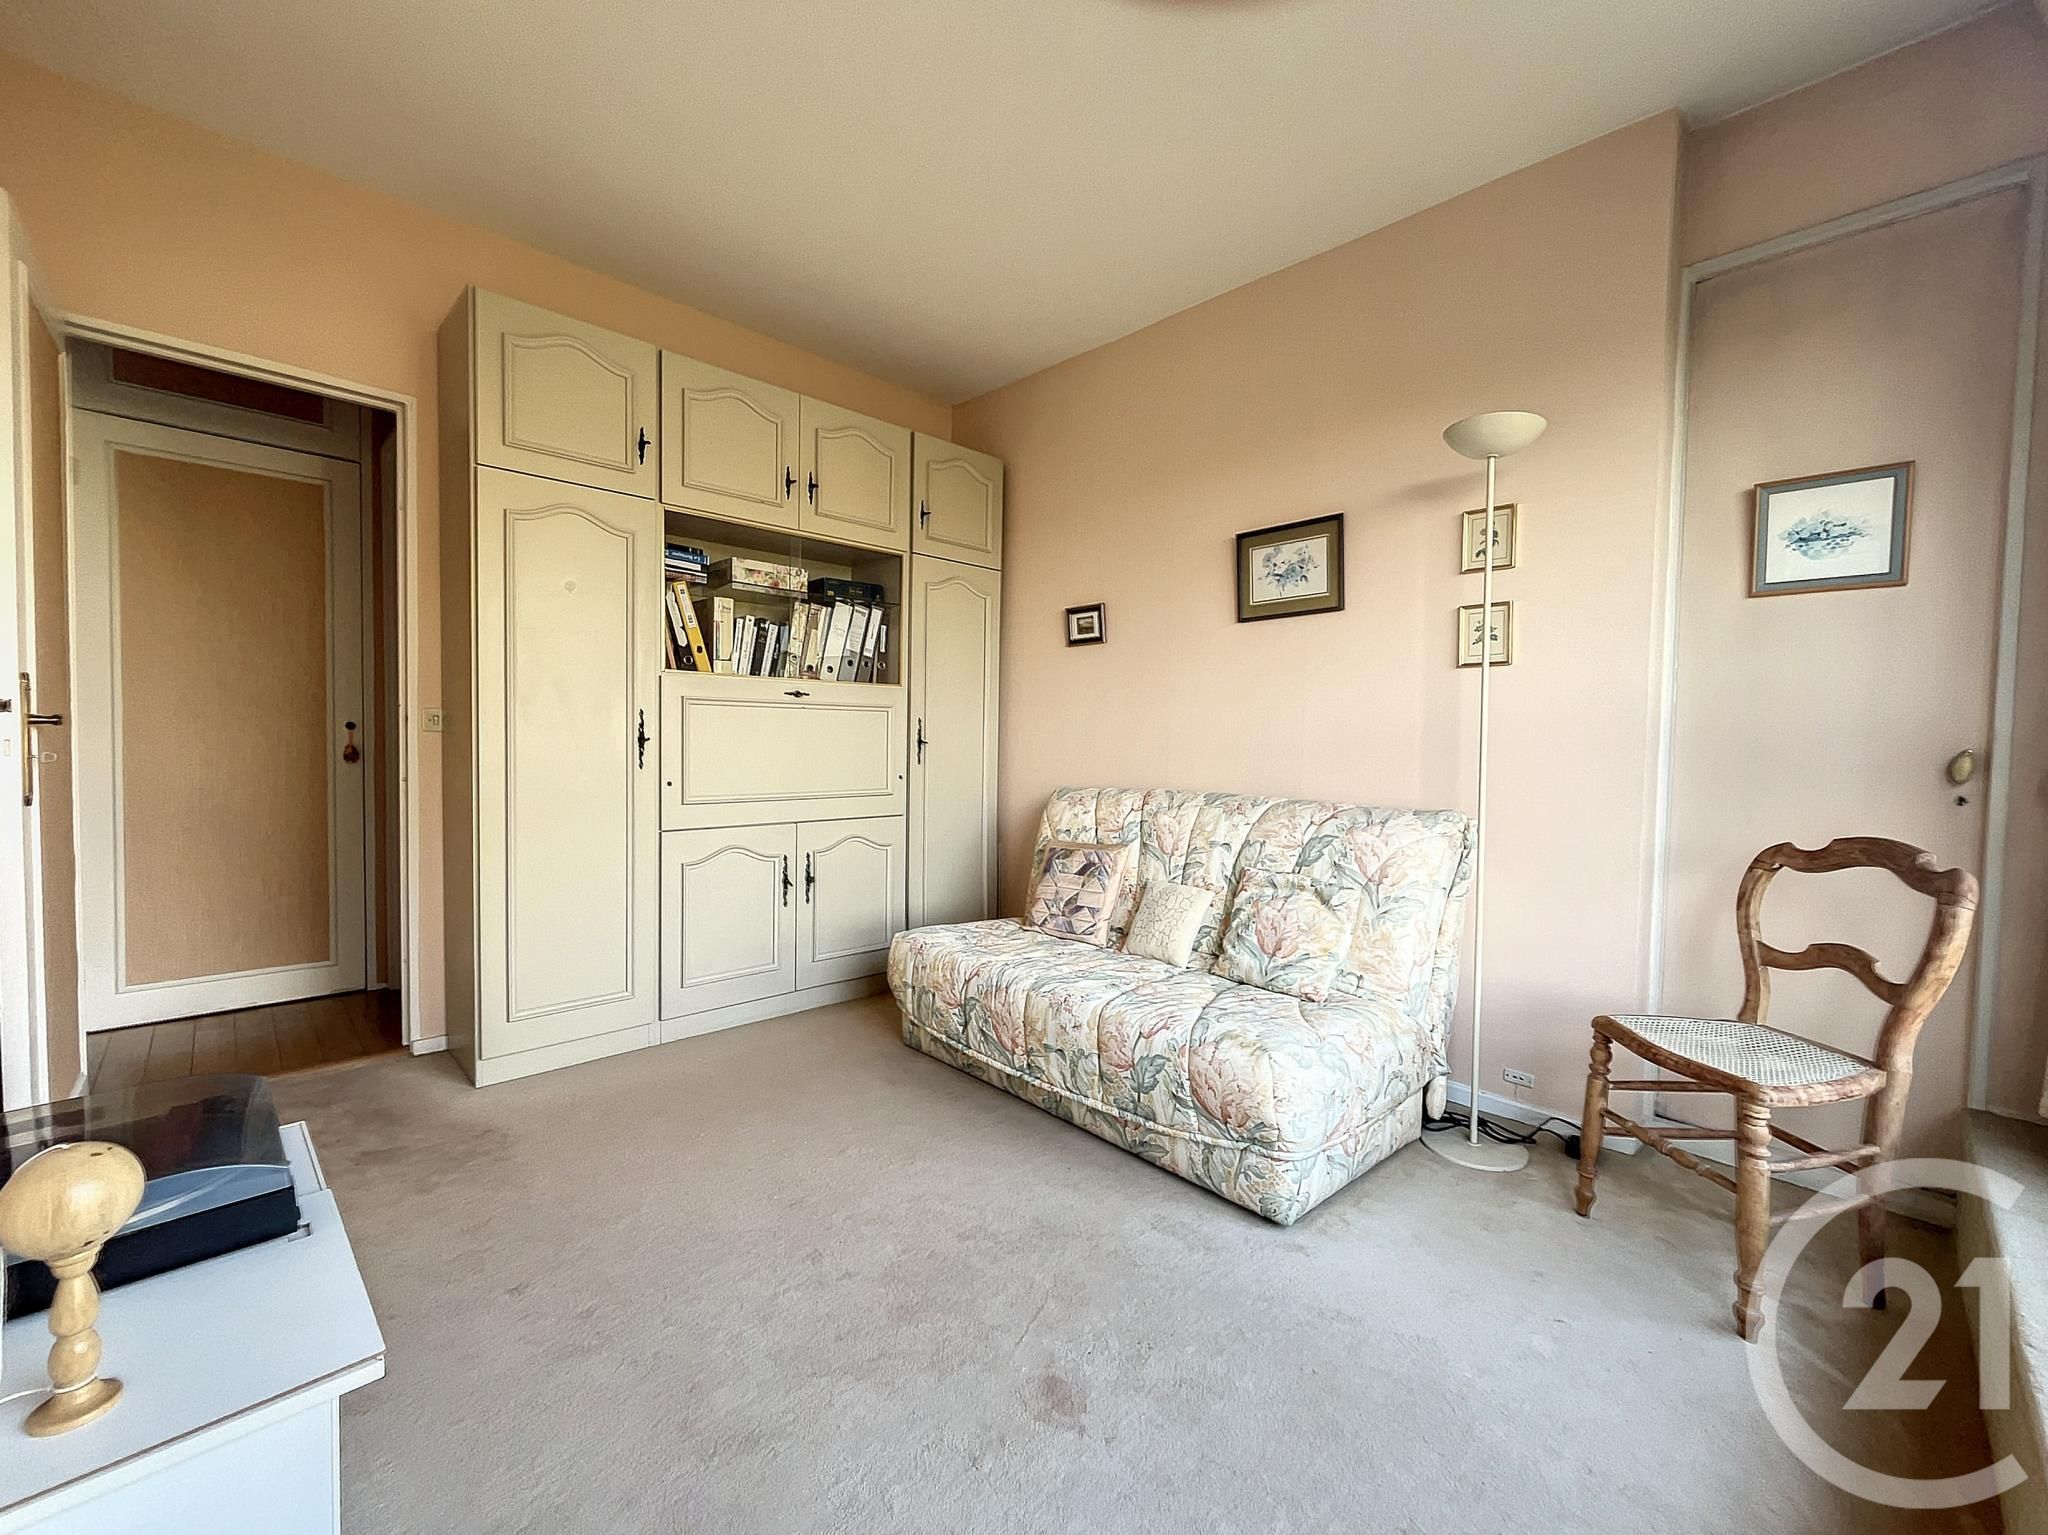 Appartement a louer ville-d'avray - 5 pièce(s) - 97.46 m2 - Surfyn